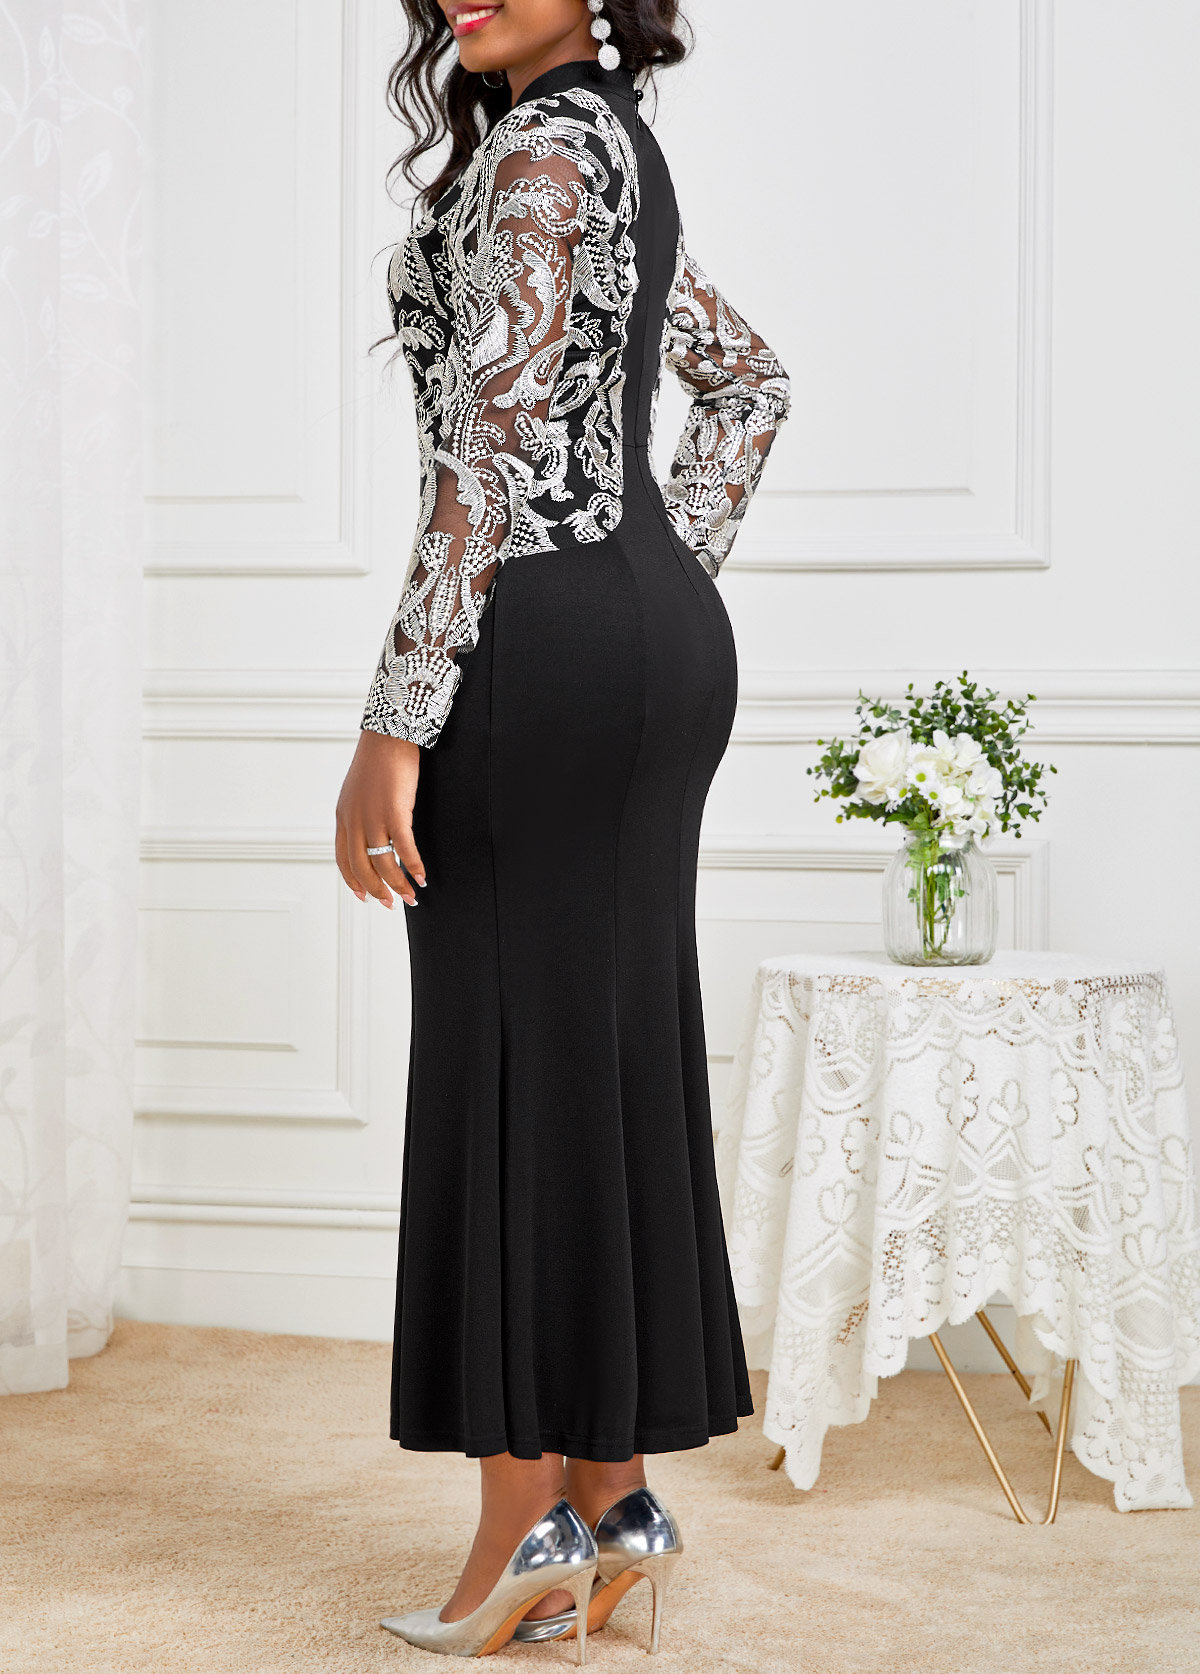 Lace Black Long Sleeve Round Neck Dress